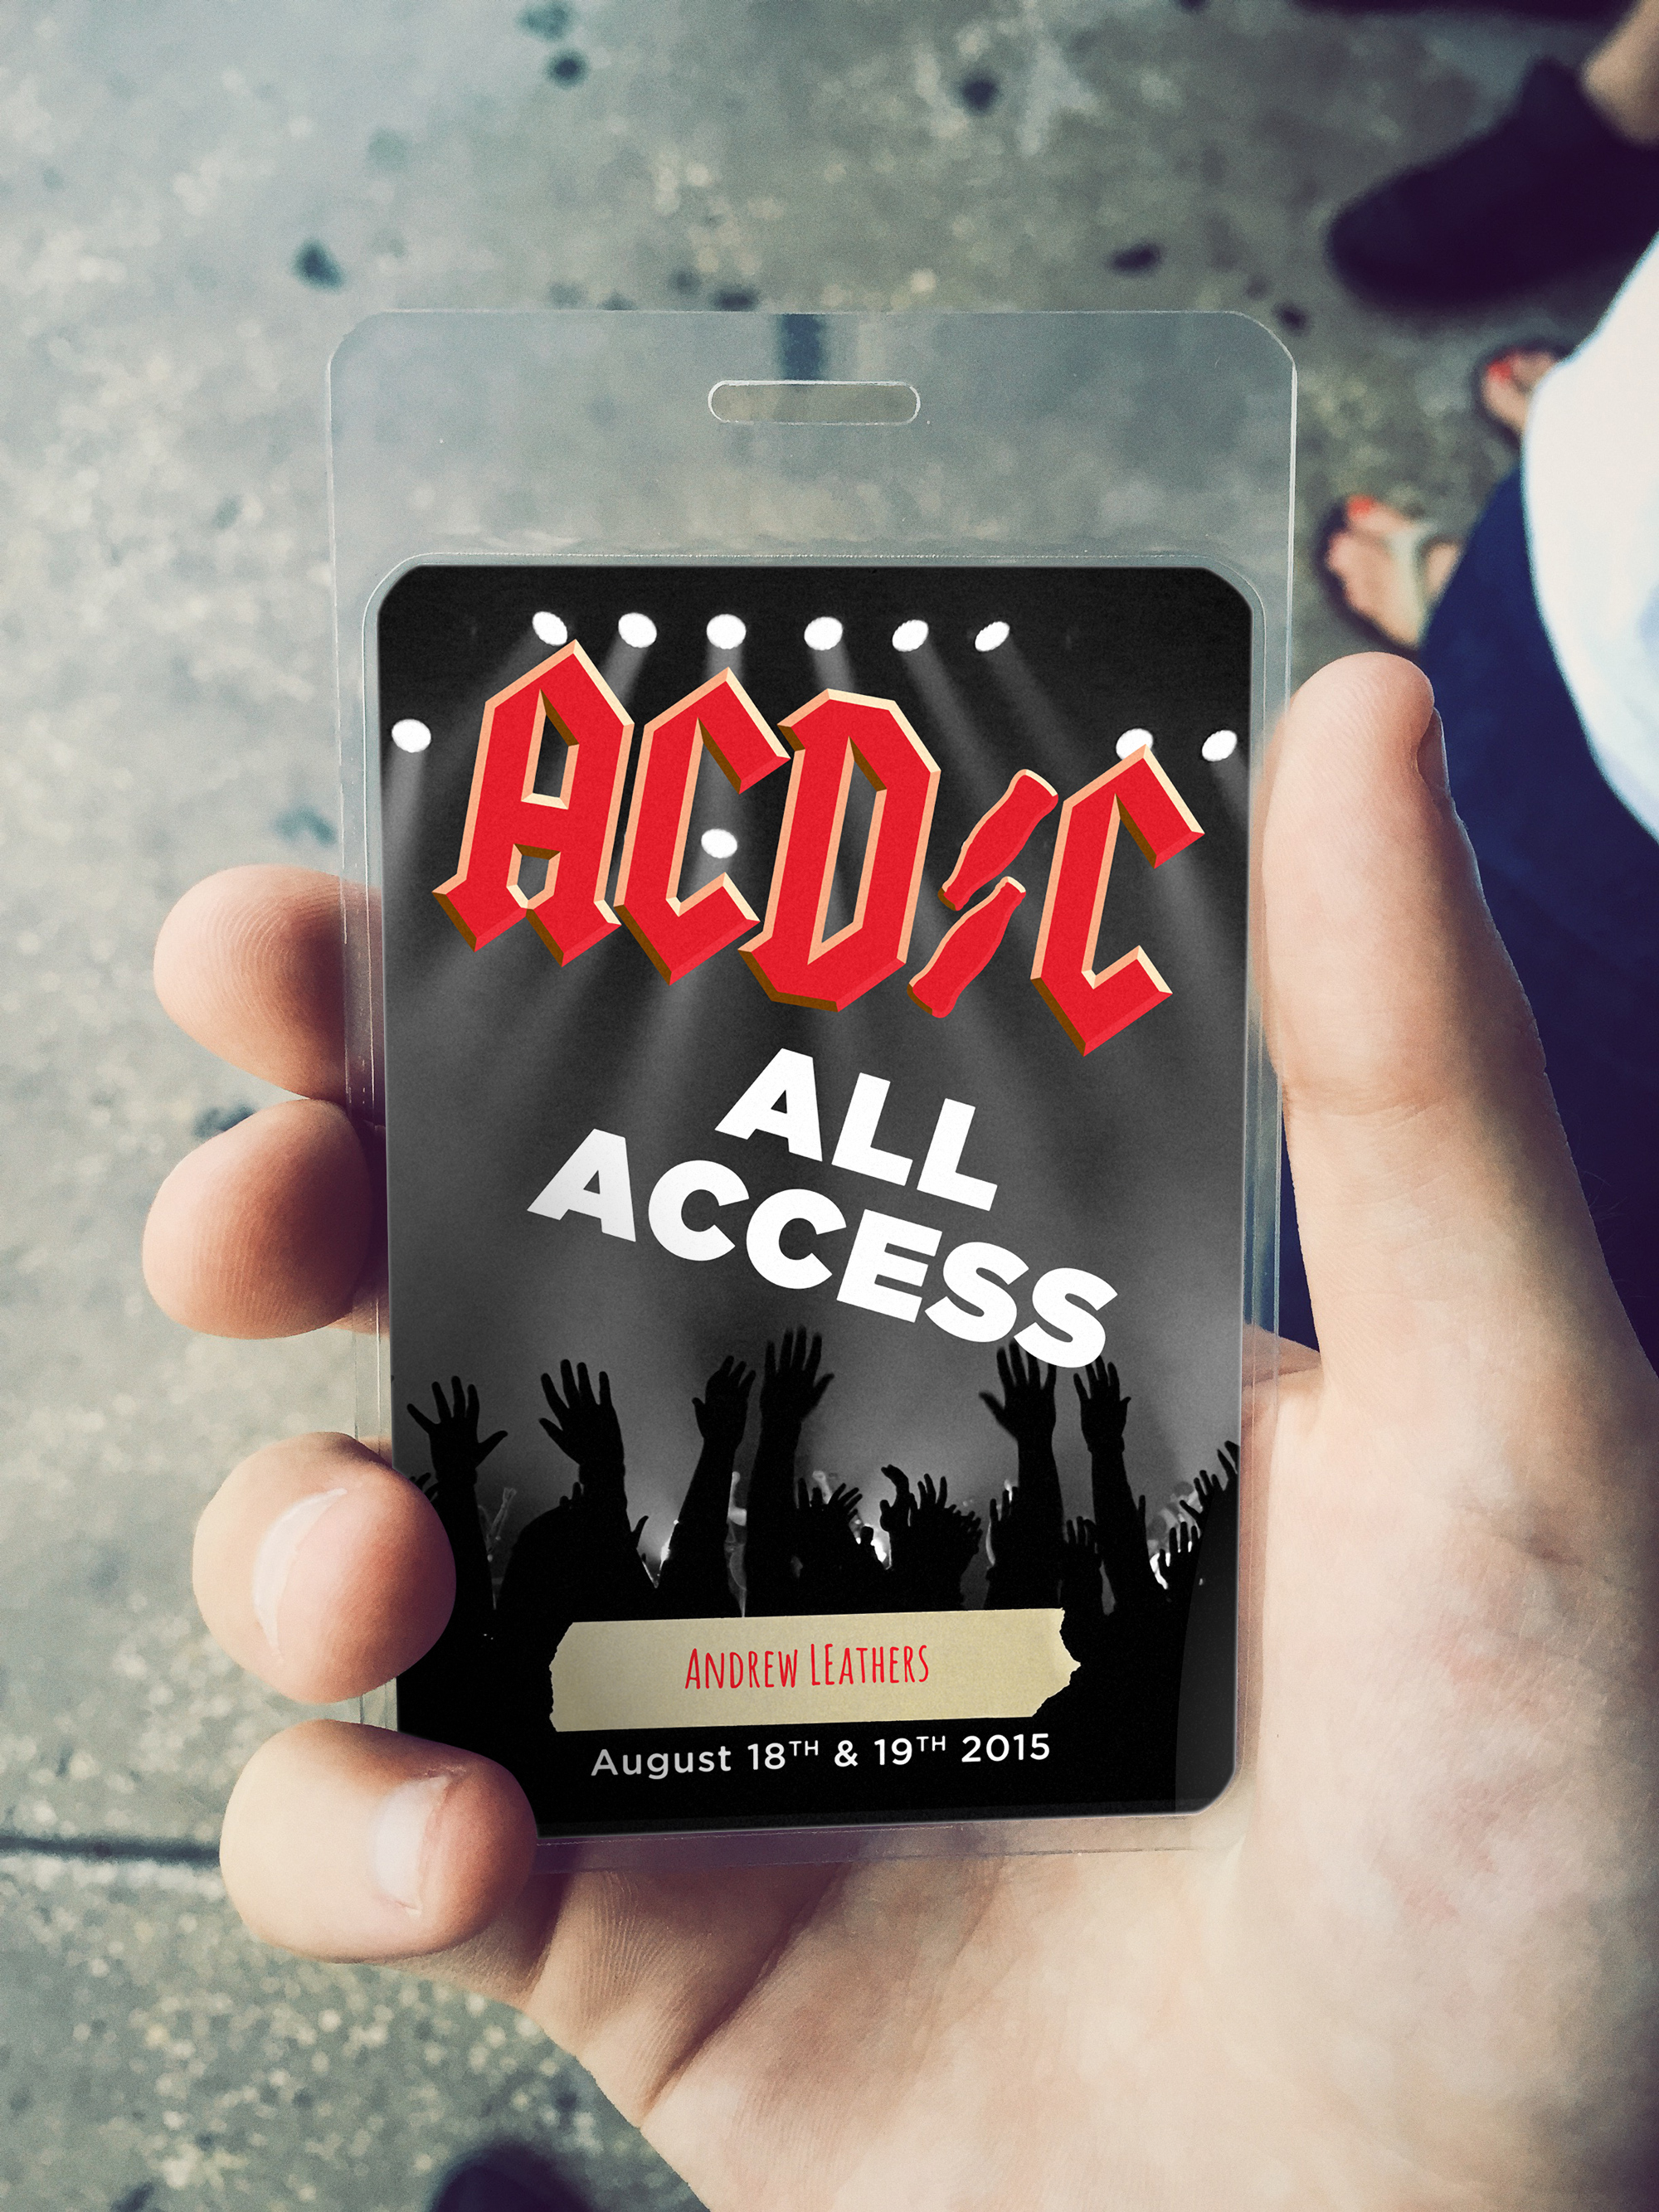 AC/DC VIP pass